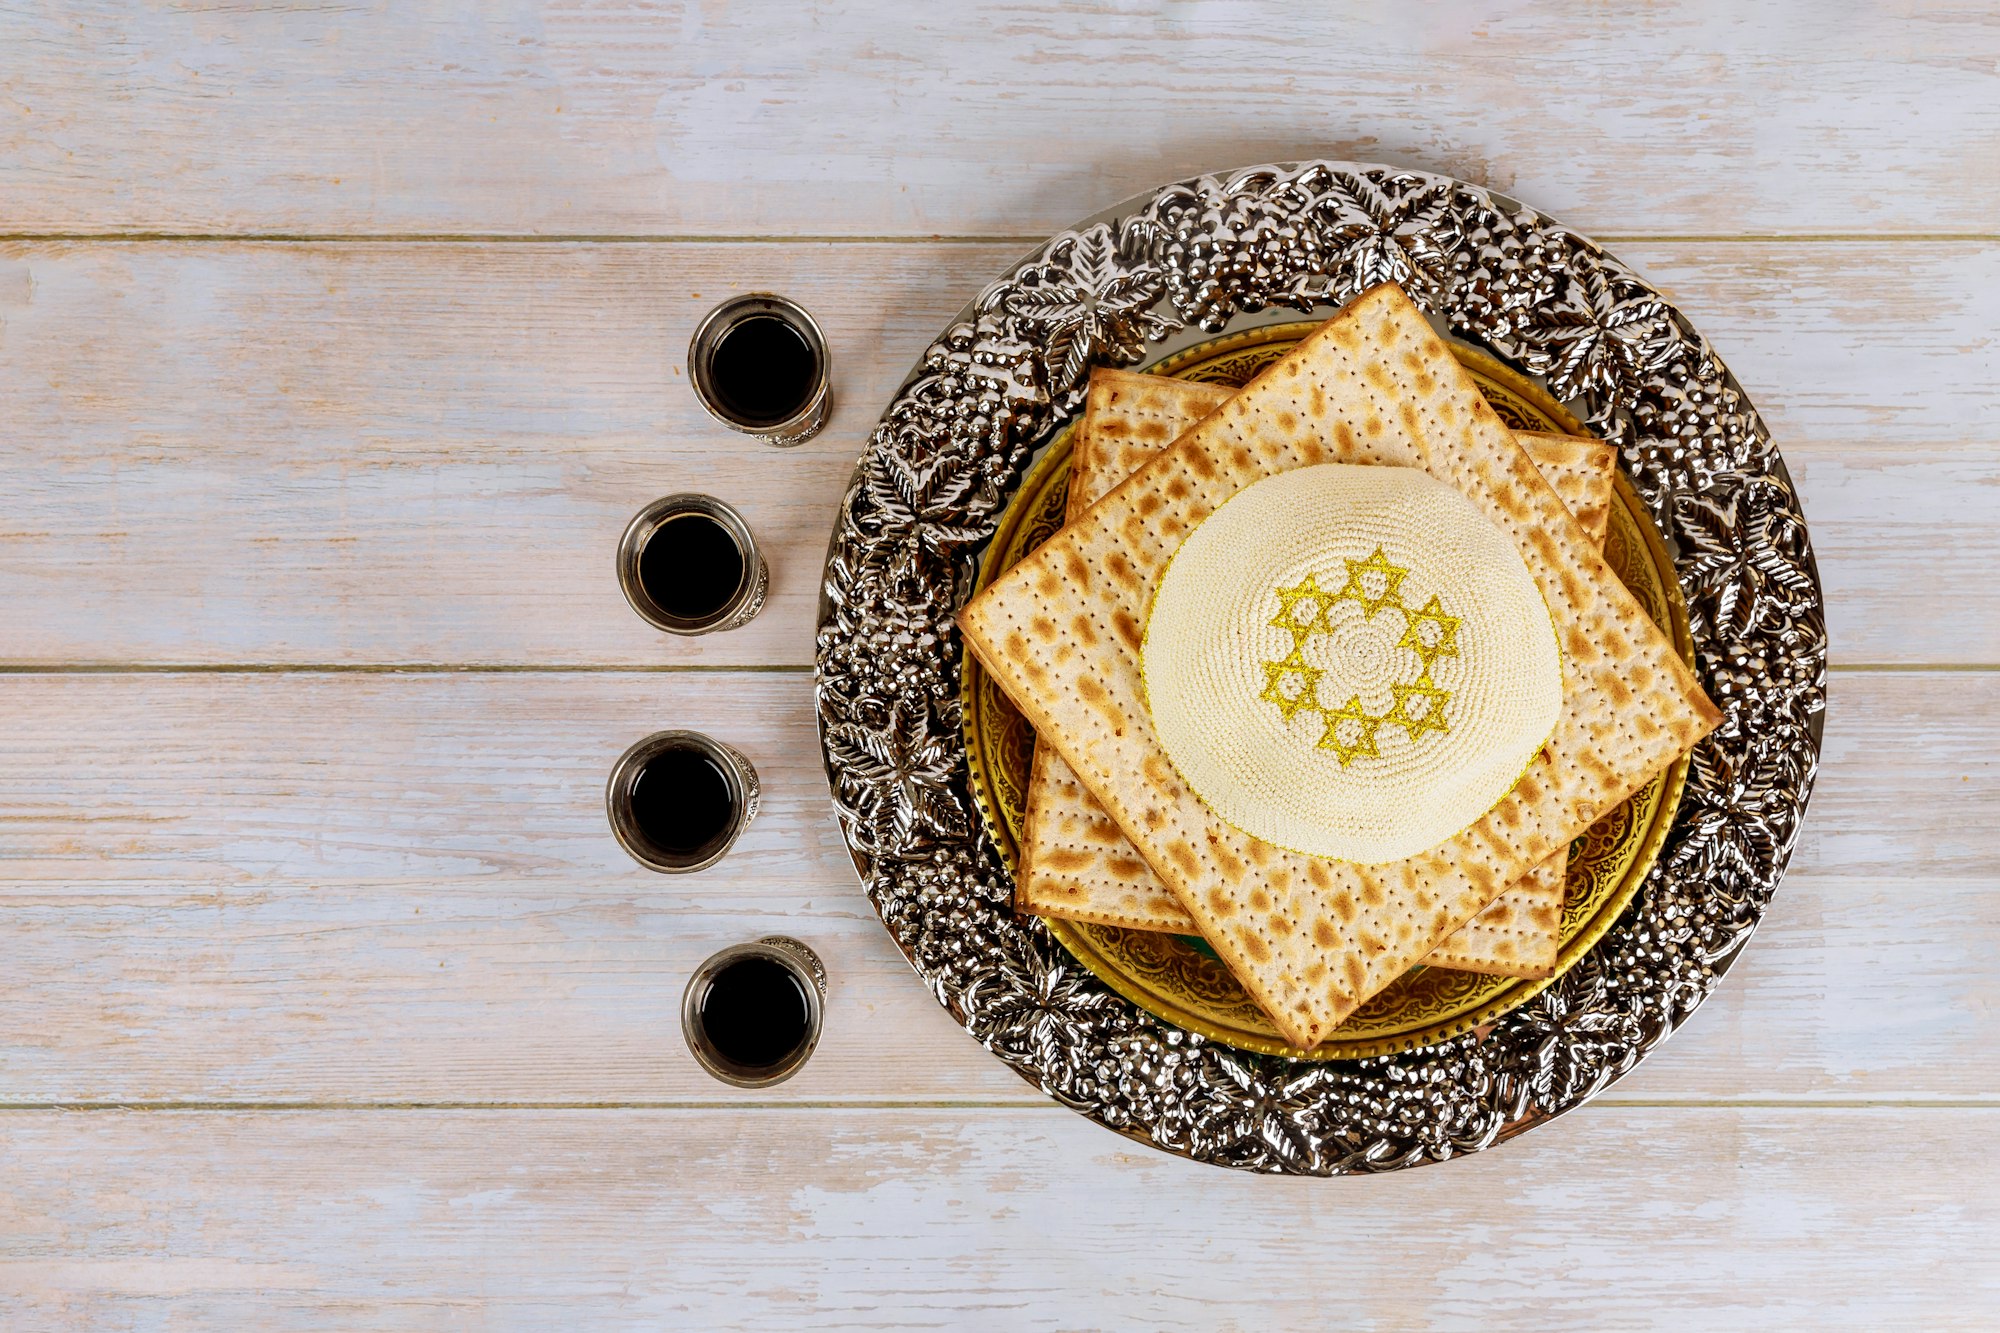 Passover pesah holiday celebration, matza unleavened bread and four cup kosher wine, jewish